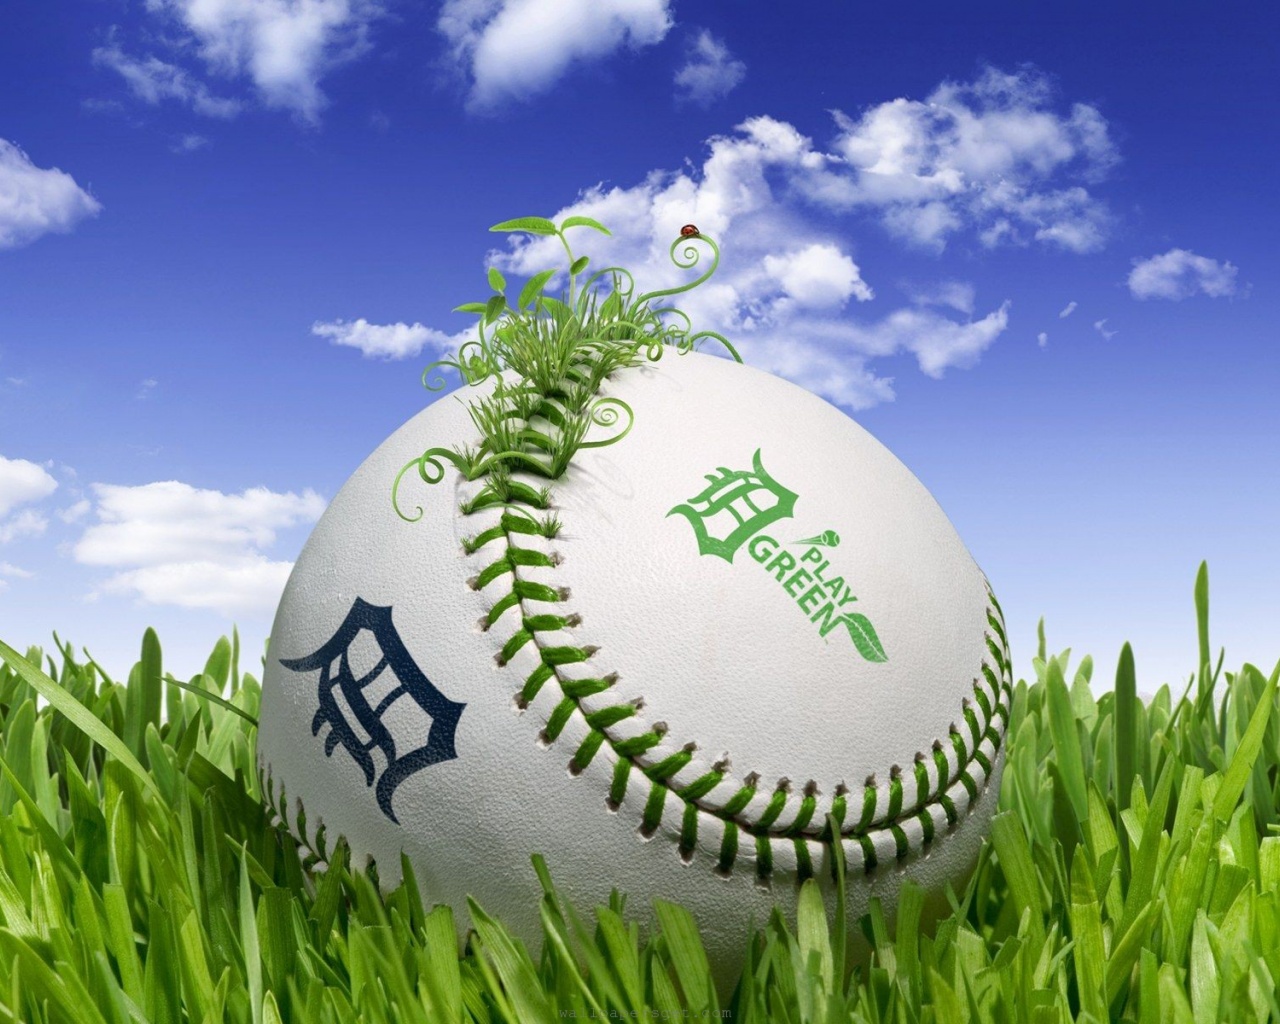 Baseball 3D Play Green Sports